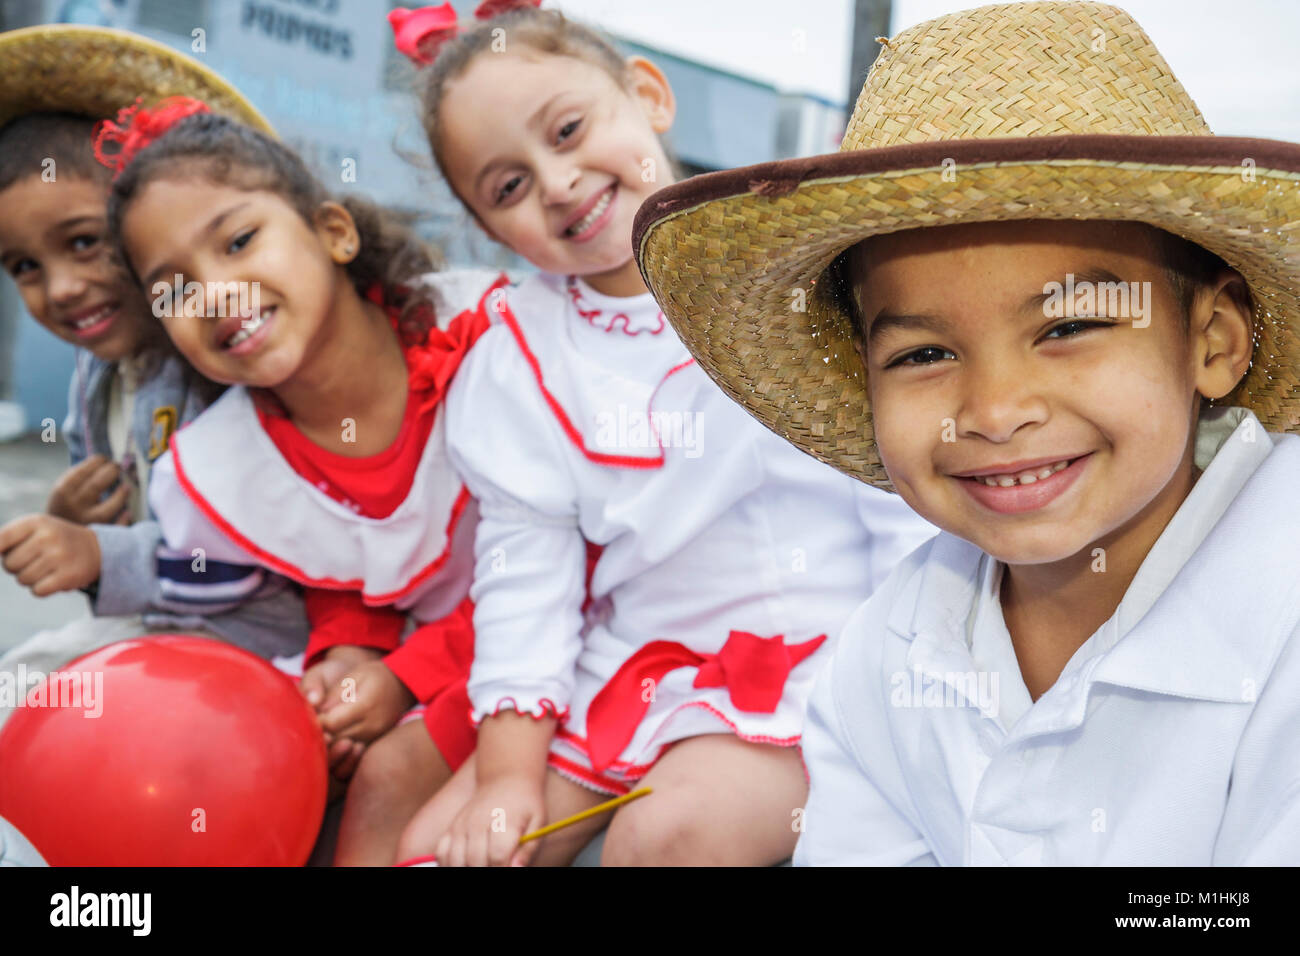 Florida,Hialeah,Jose Marti Parade,honoring Cuban poet,participant,Hispanic boy boys male kids children girls,costume,straw hat,FL080120048 Stock Photo